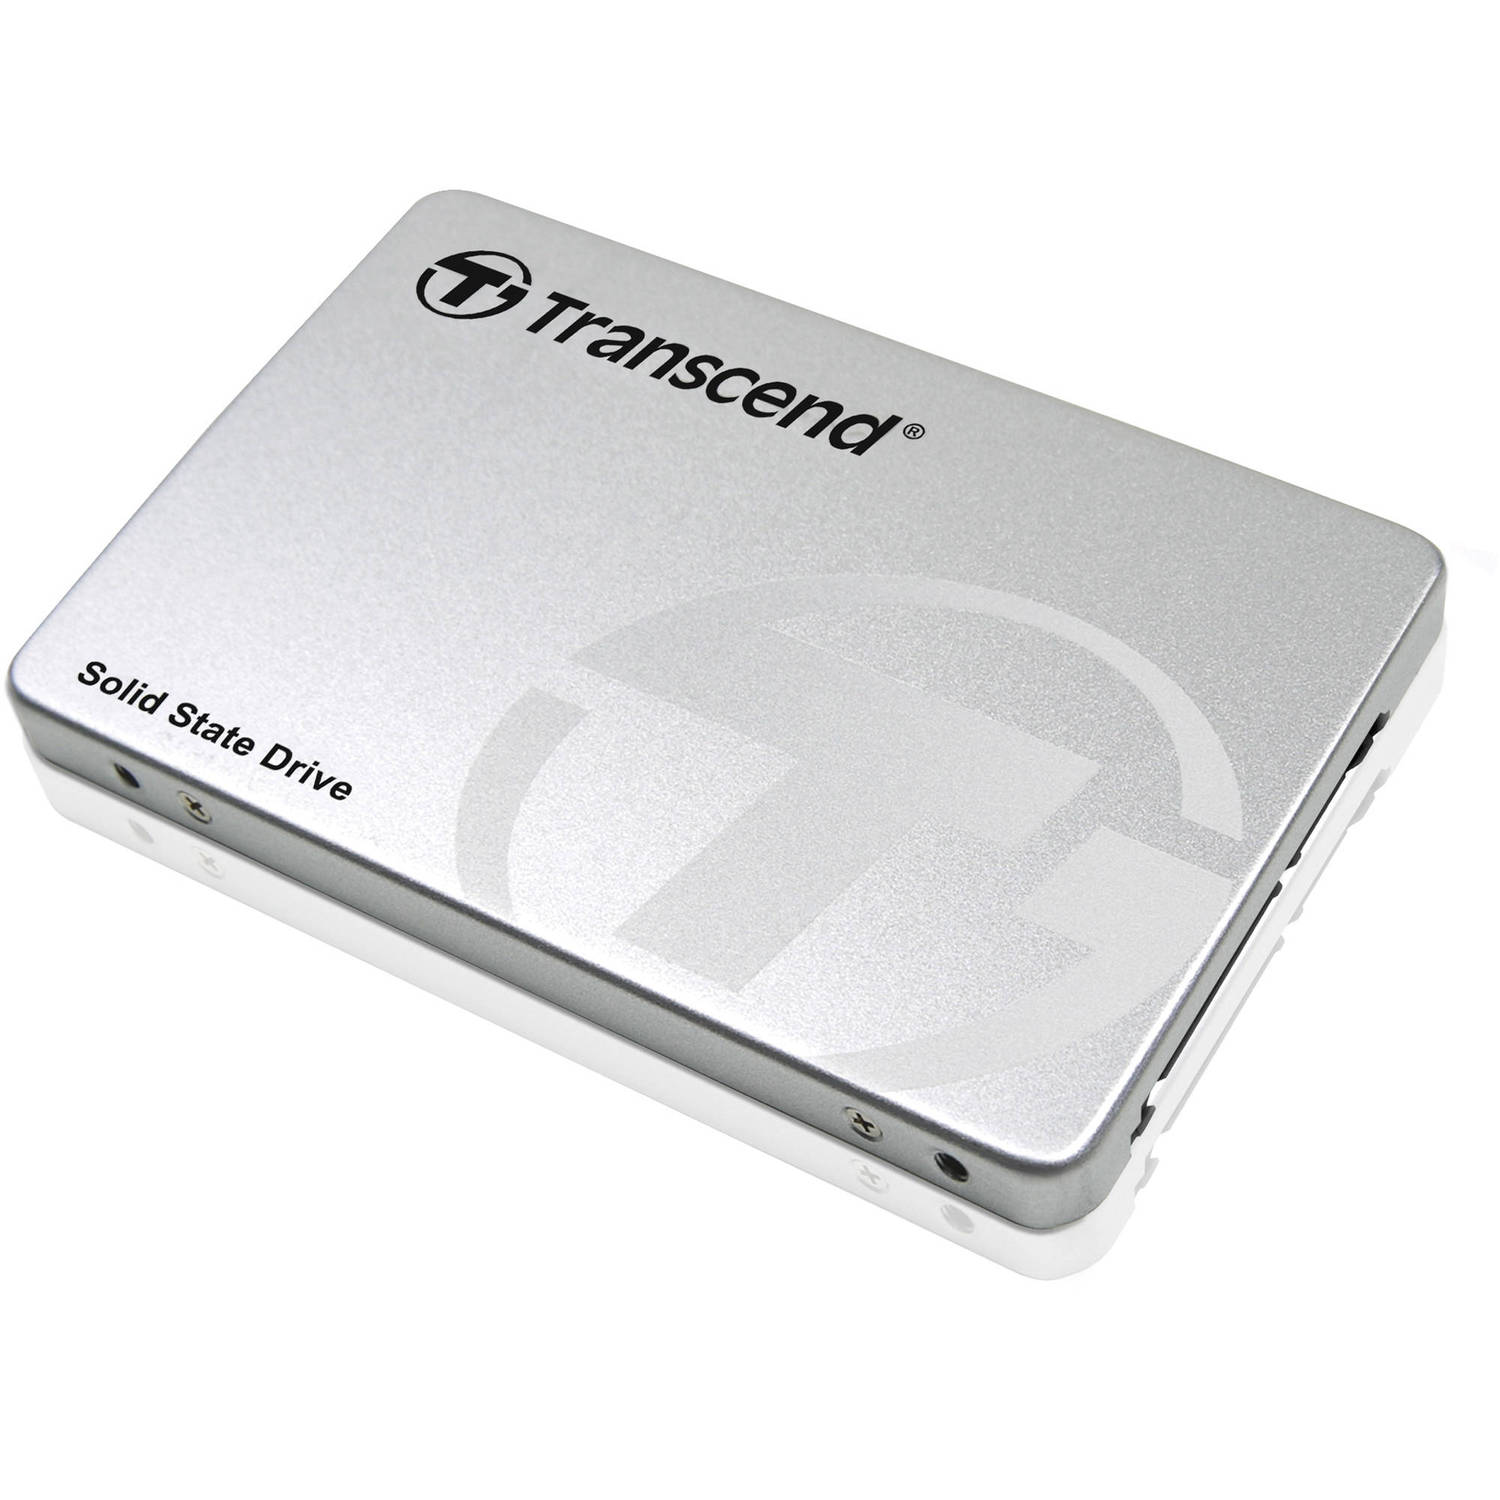 Transcend 256GB MLC SATA III 6Gb/s 2.5" Solid State Drive 370